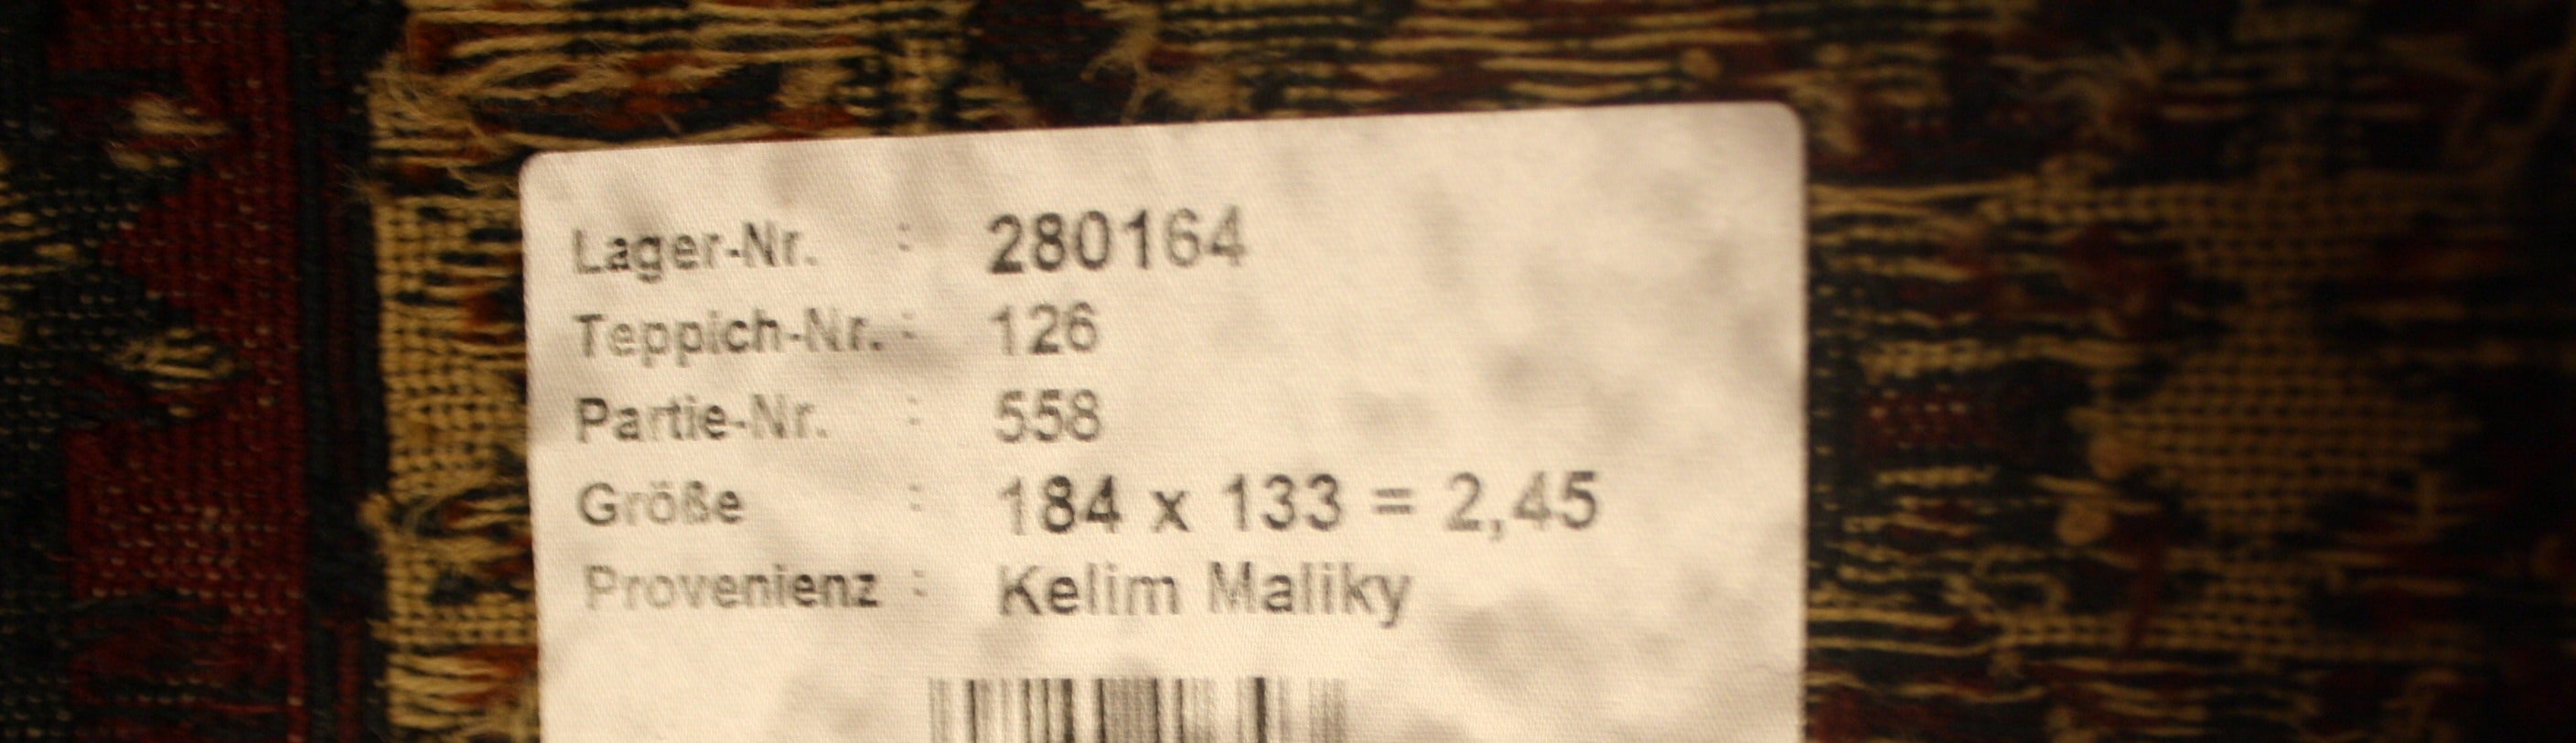 Kelim Sumak Maliky 184x133